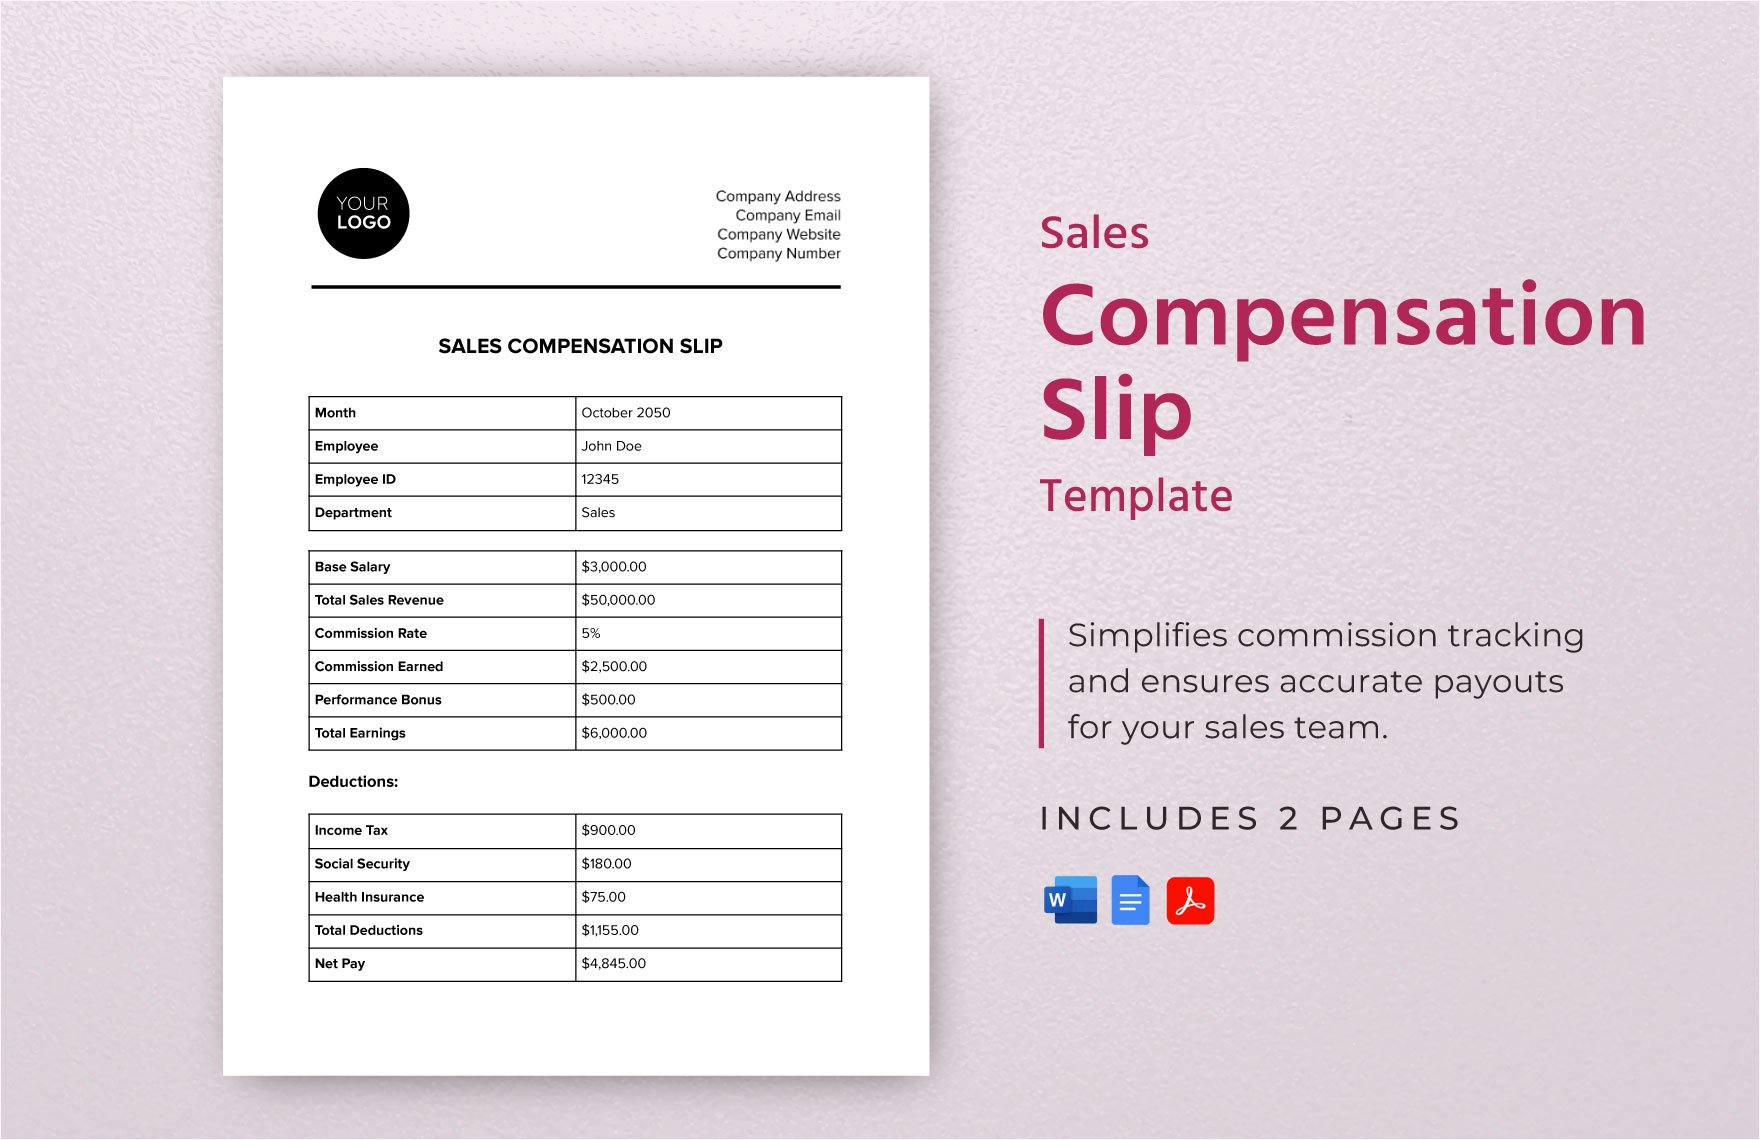 Sales Compensation Slip Template in Word, Google Docs, PDF